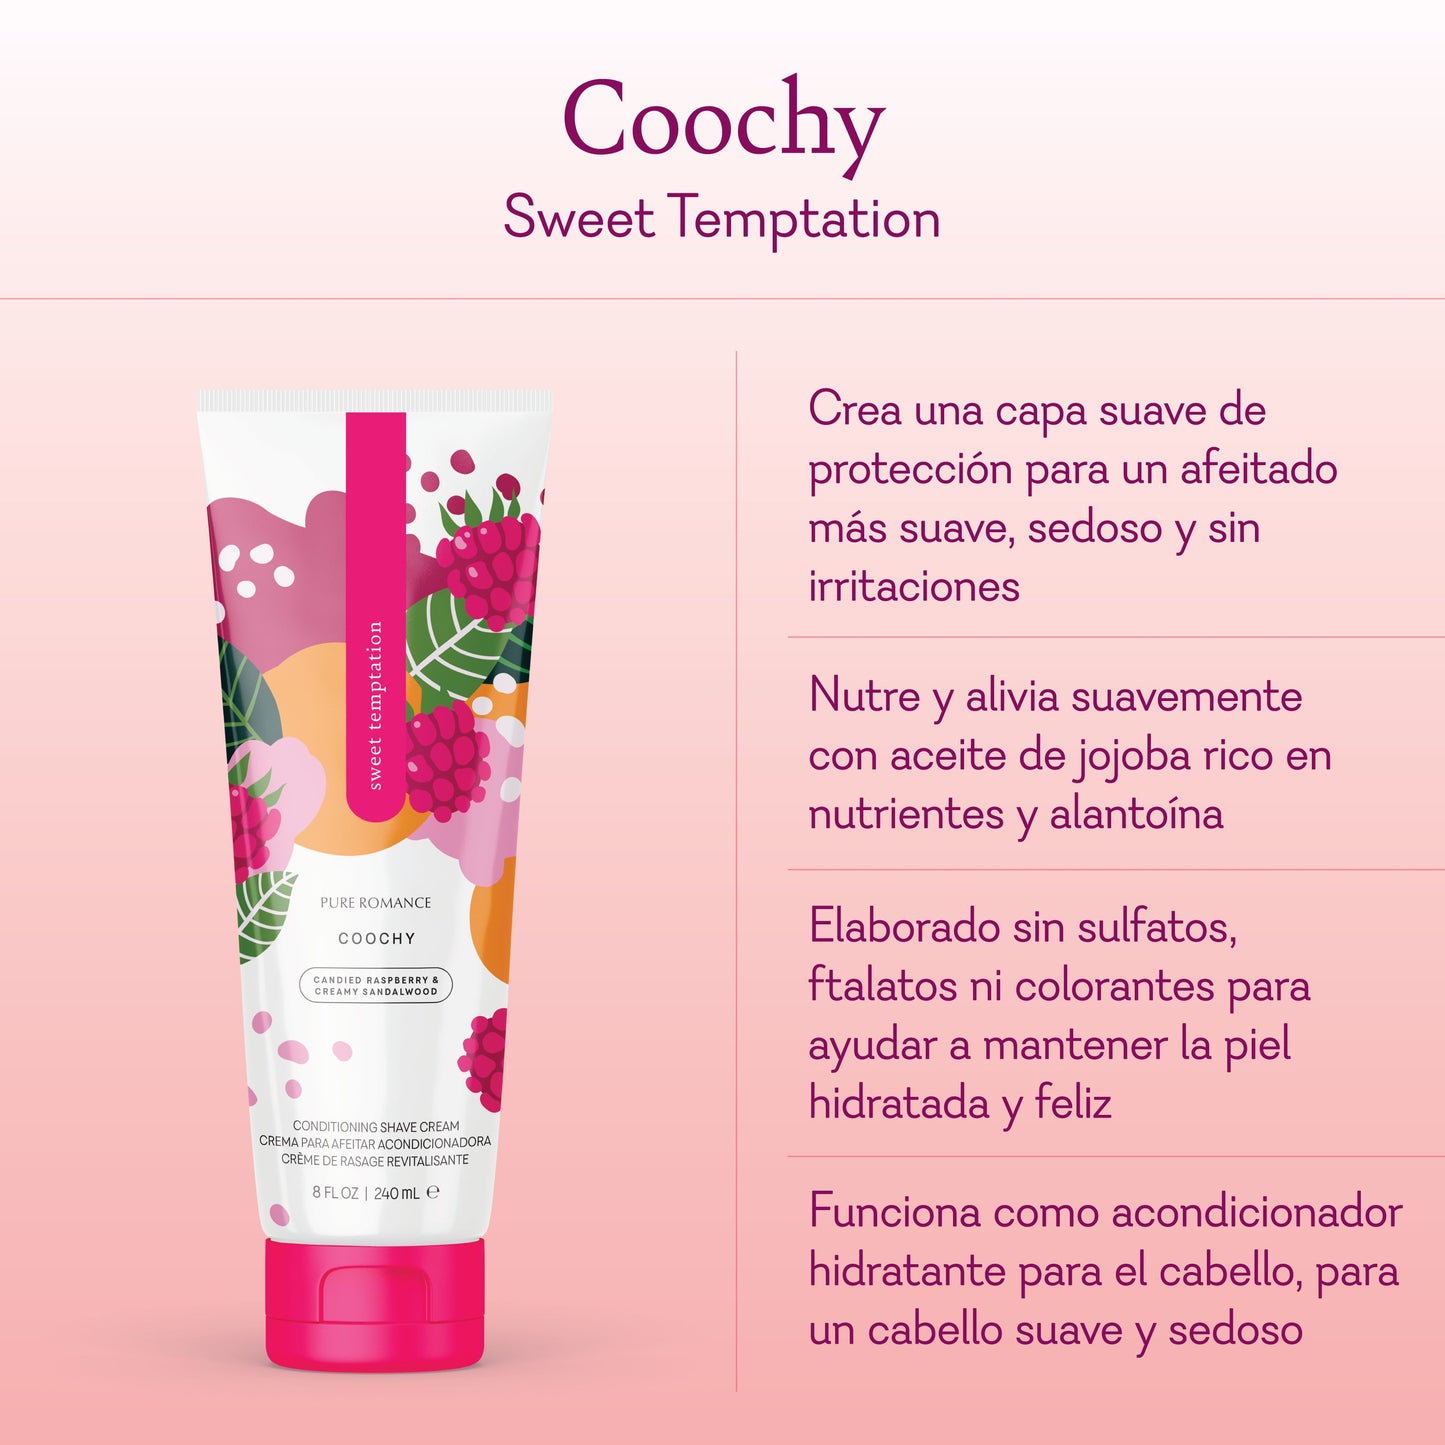 Coochy - Sweet Temptation